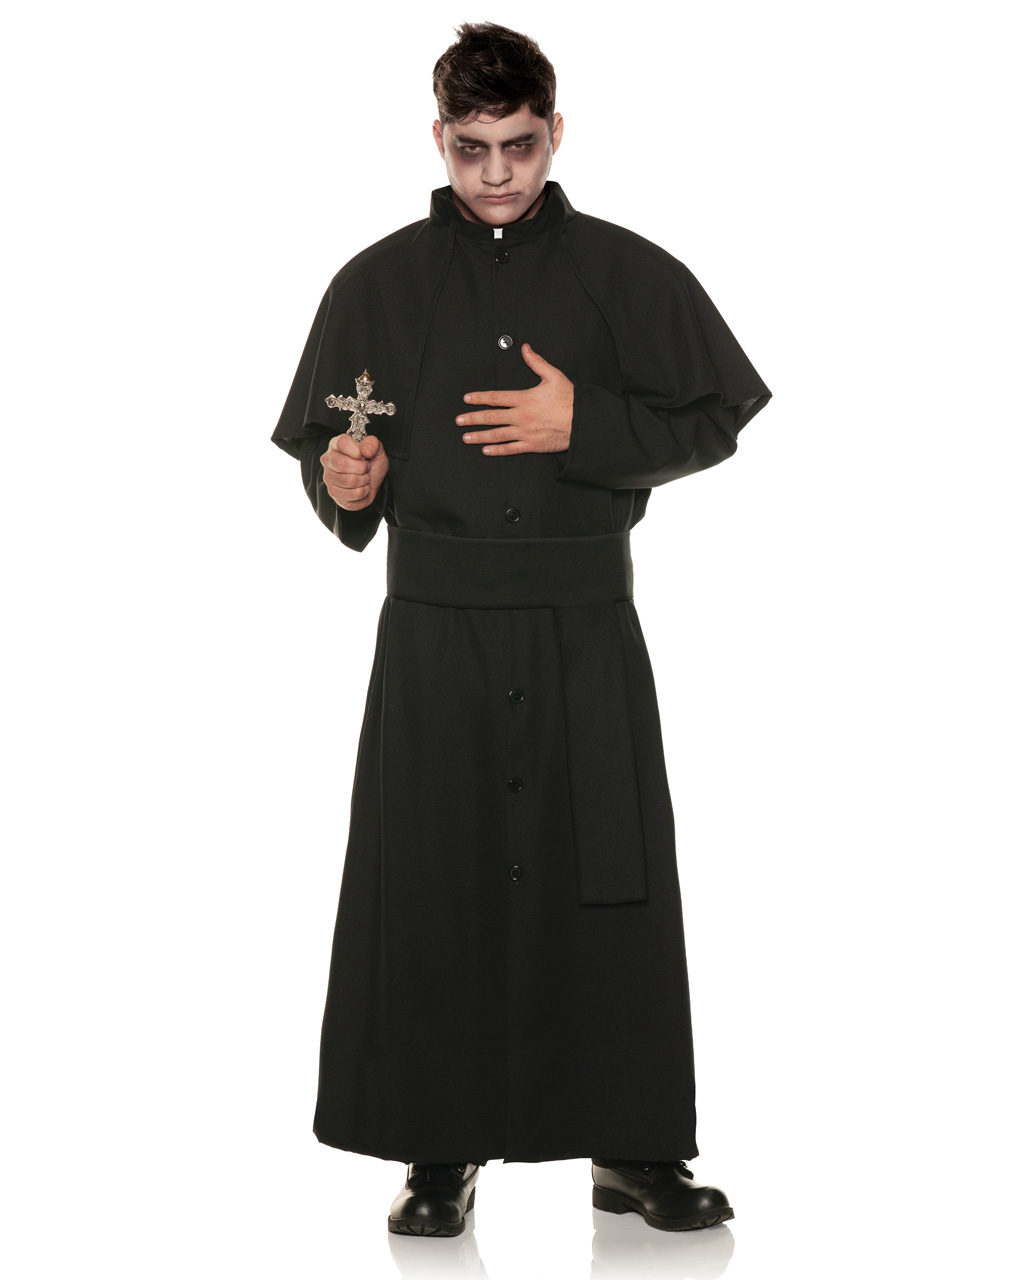 Exorcism Priest Costume Xxl Halloween Costume Horror